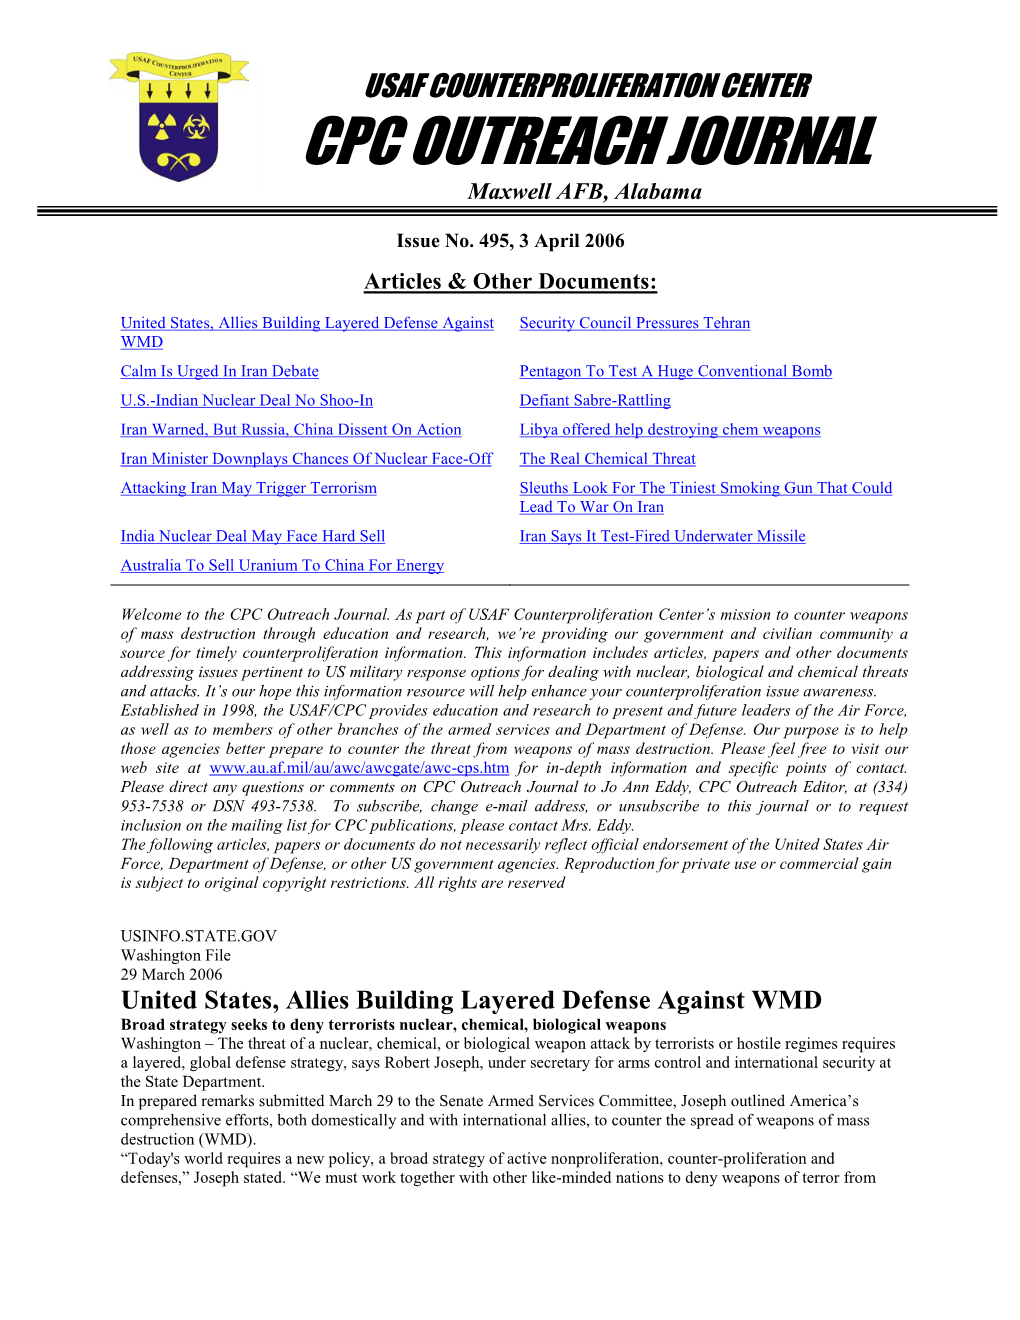 USAF Counterproliferation Center CPC Outreach Journal #495